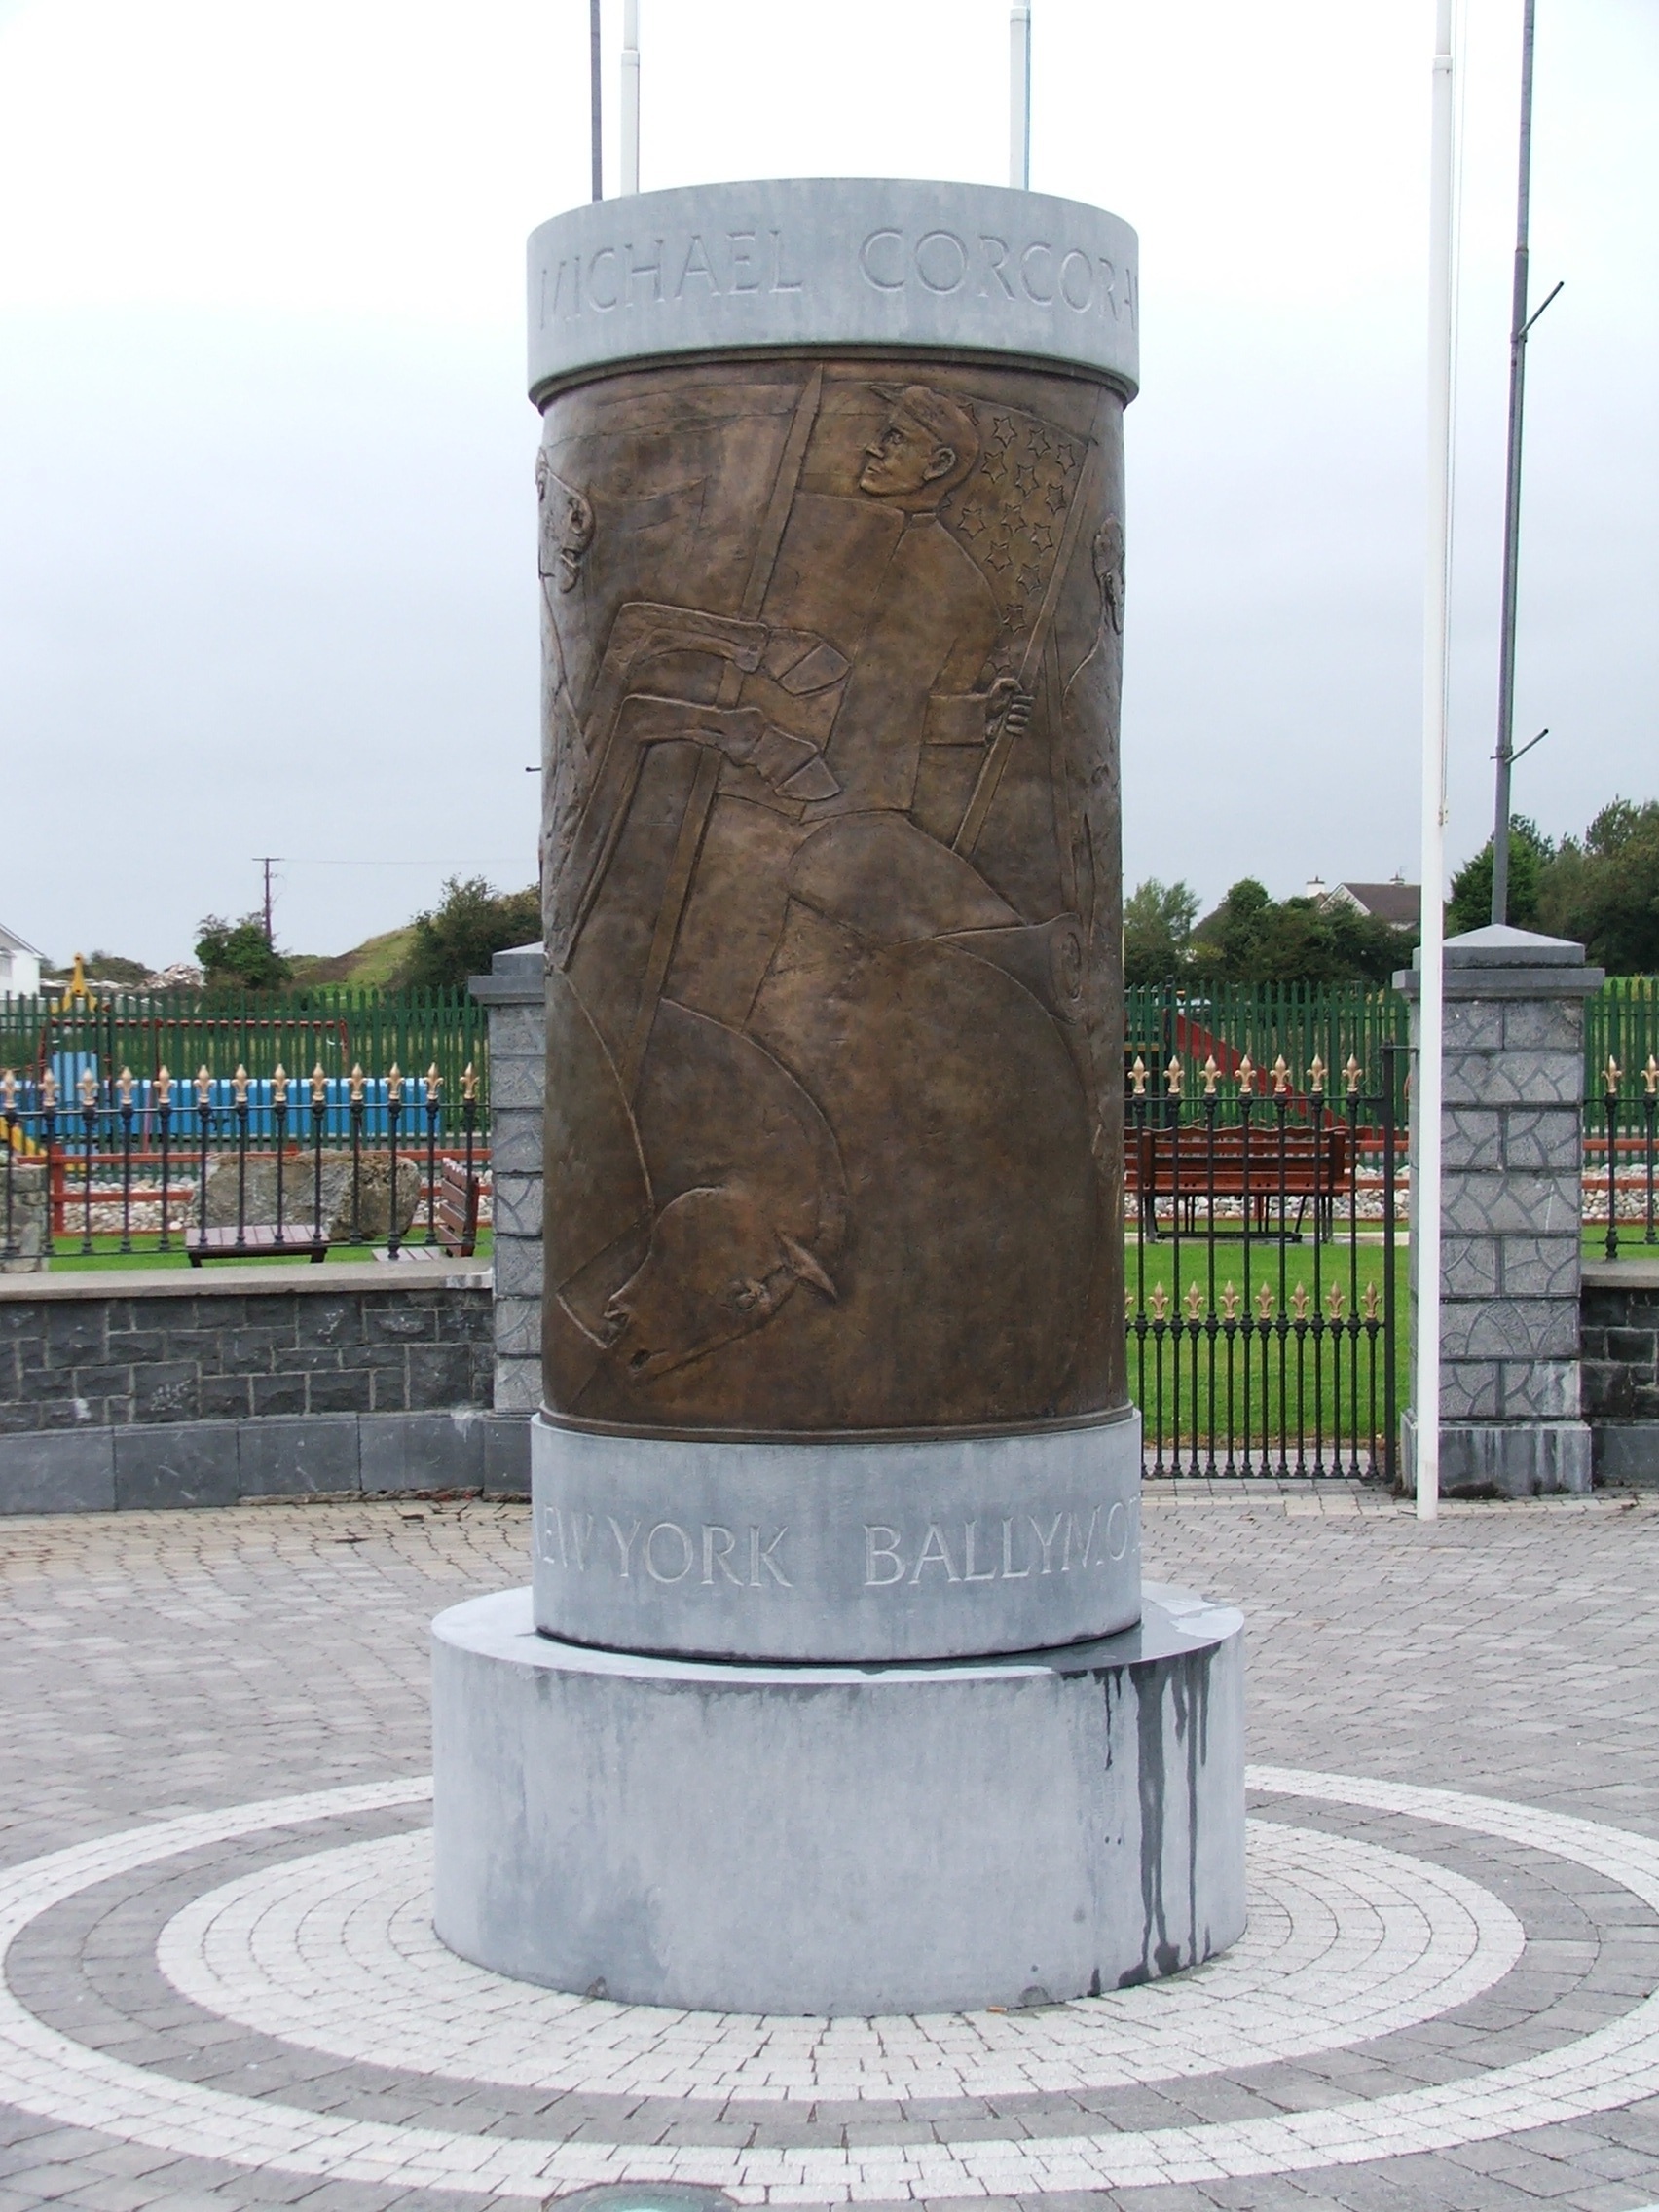 National Memorial to the Fighting 69th - Ballymote, County Sligo, Ireland